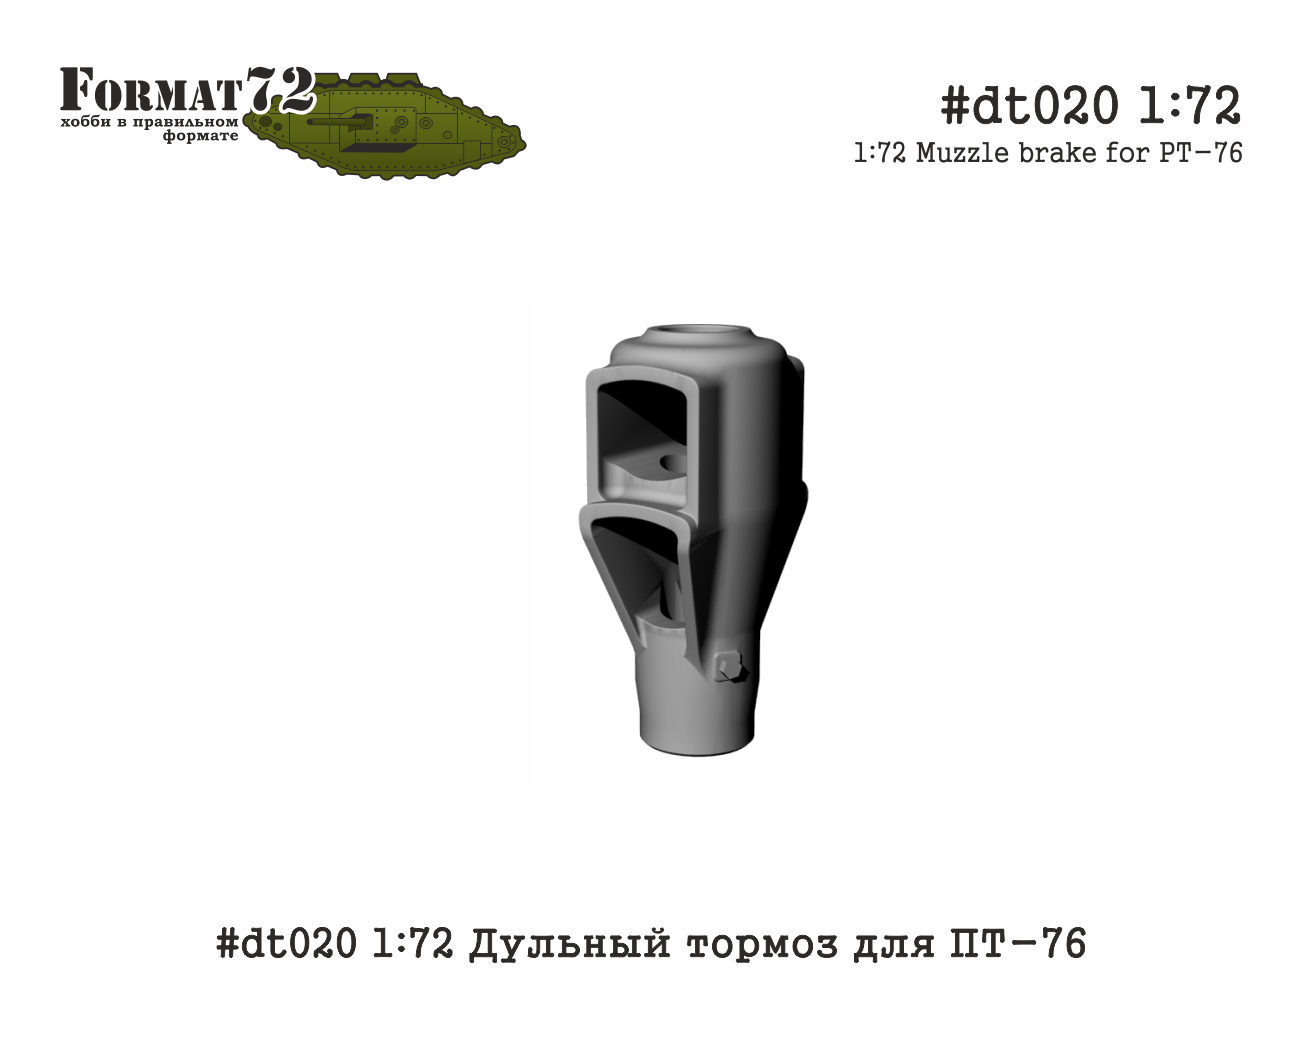 PT-76 gun muzzle brake - Click Image to Close